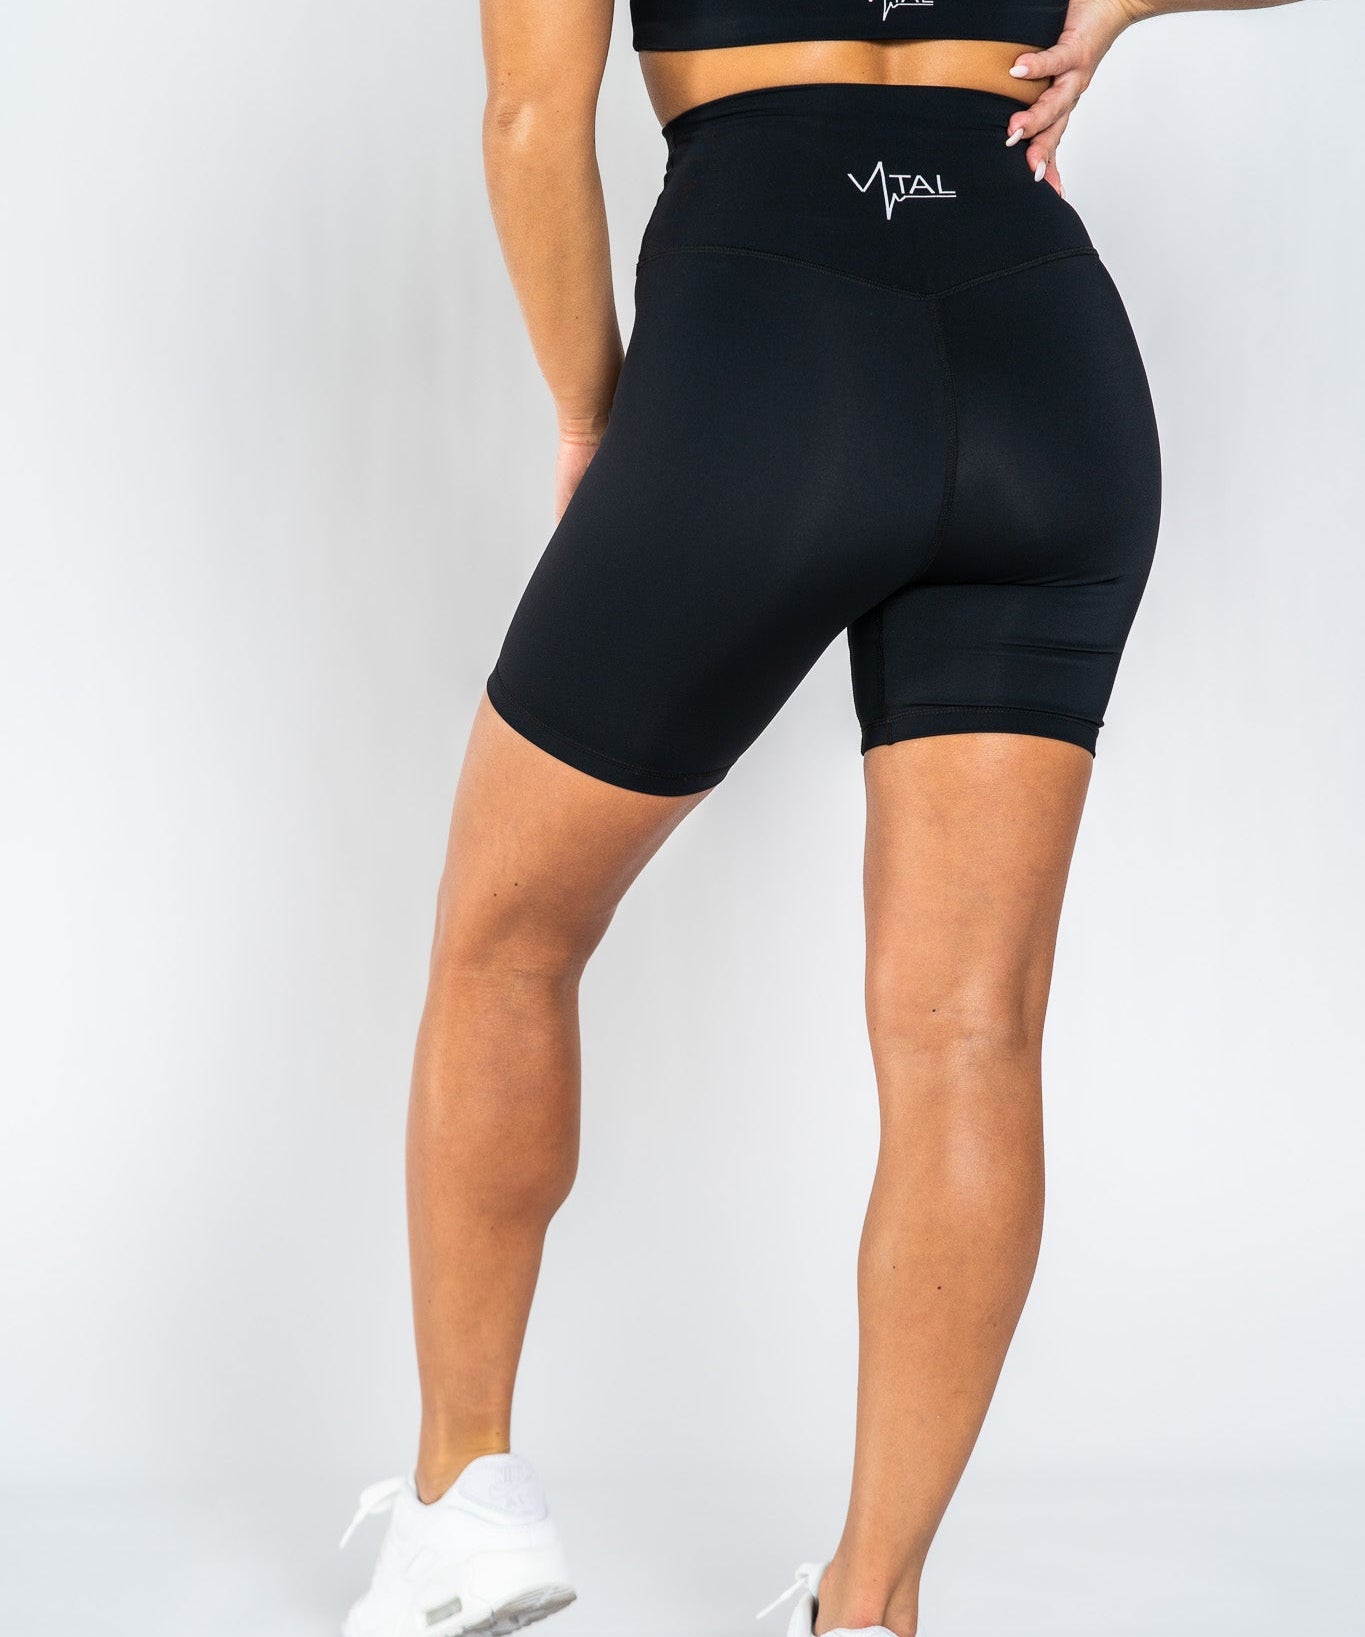 Vital Apparel Resilient Biker Shorts 6" - Black - VITAL APPAREL